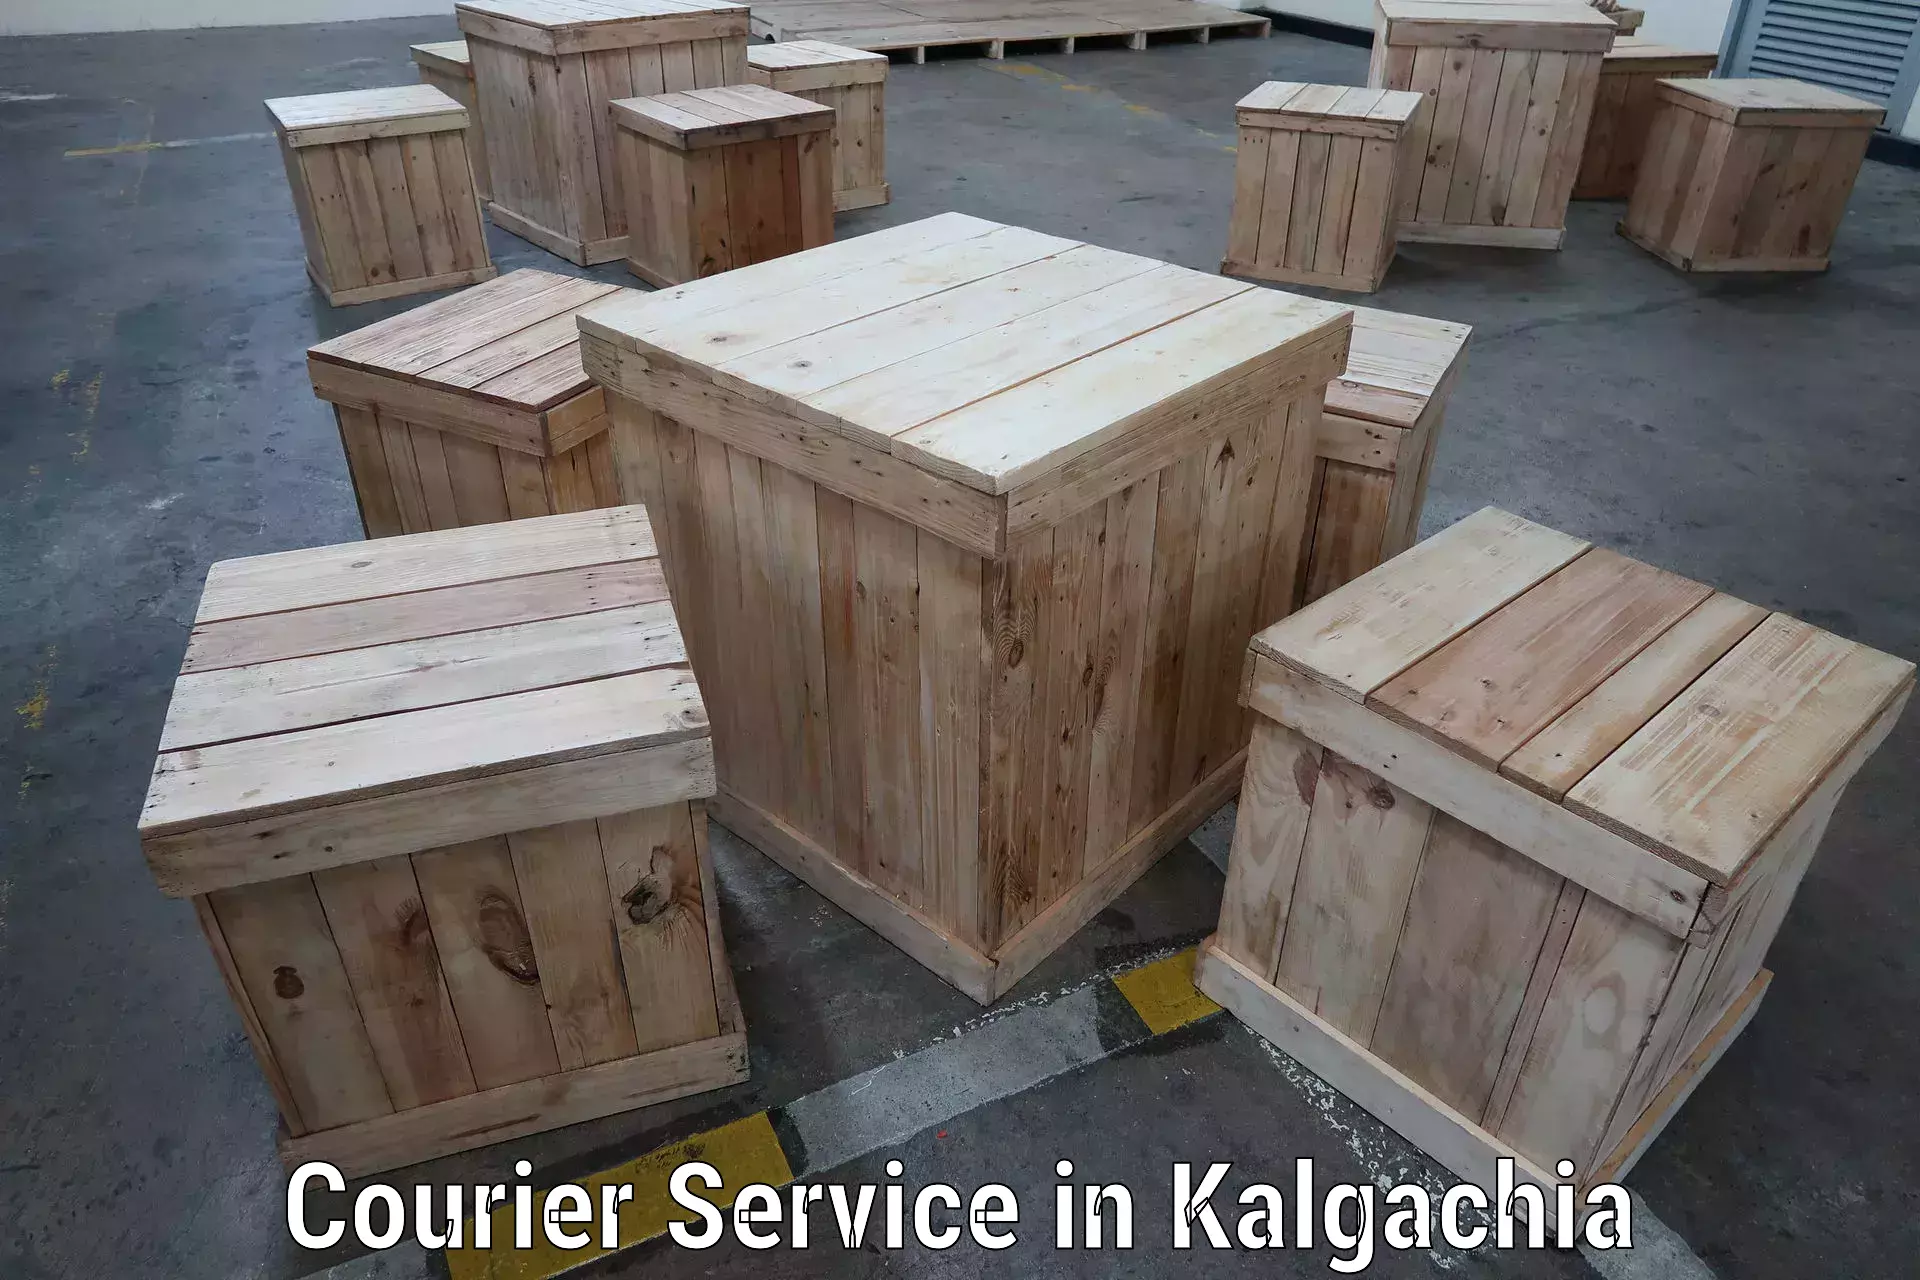 Sustainable delivery practices in Kalgachia